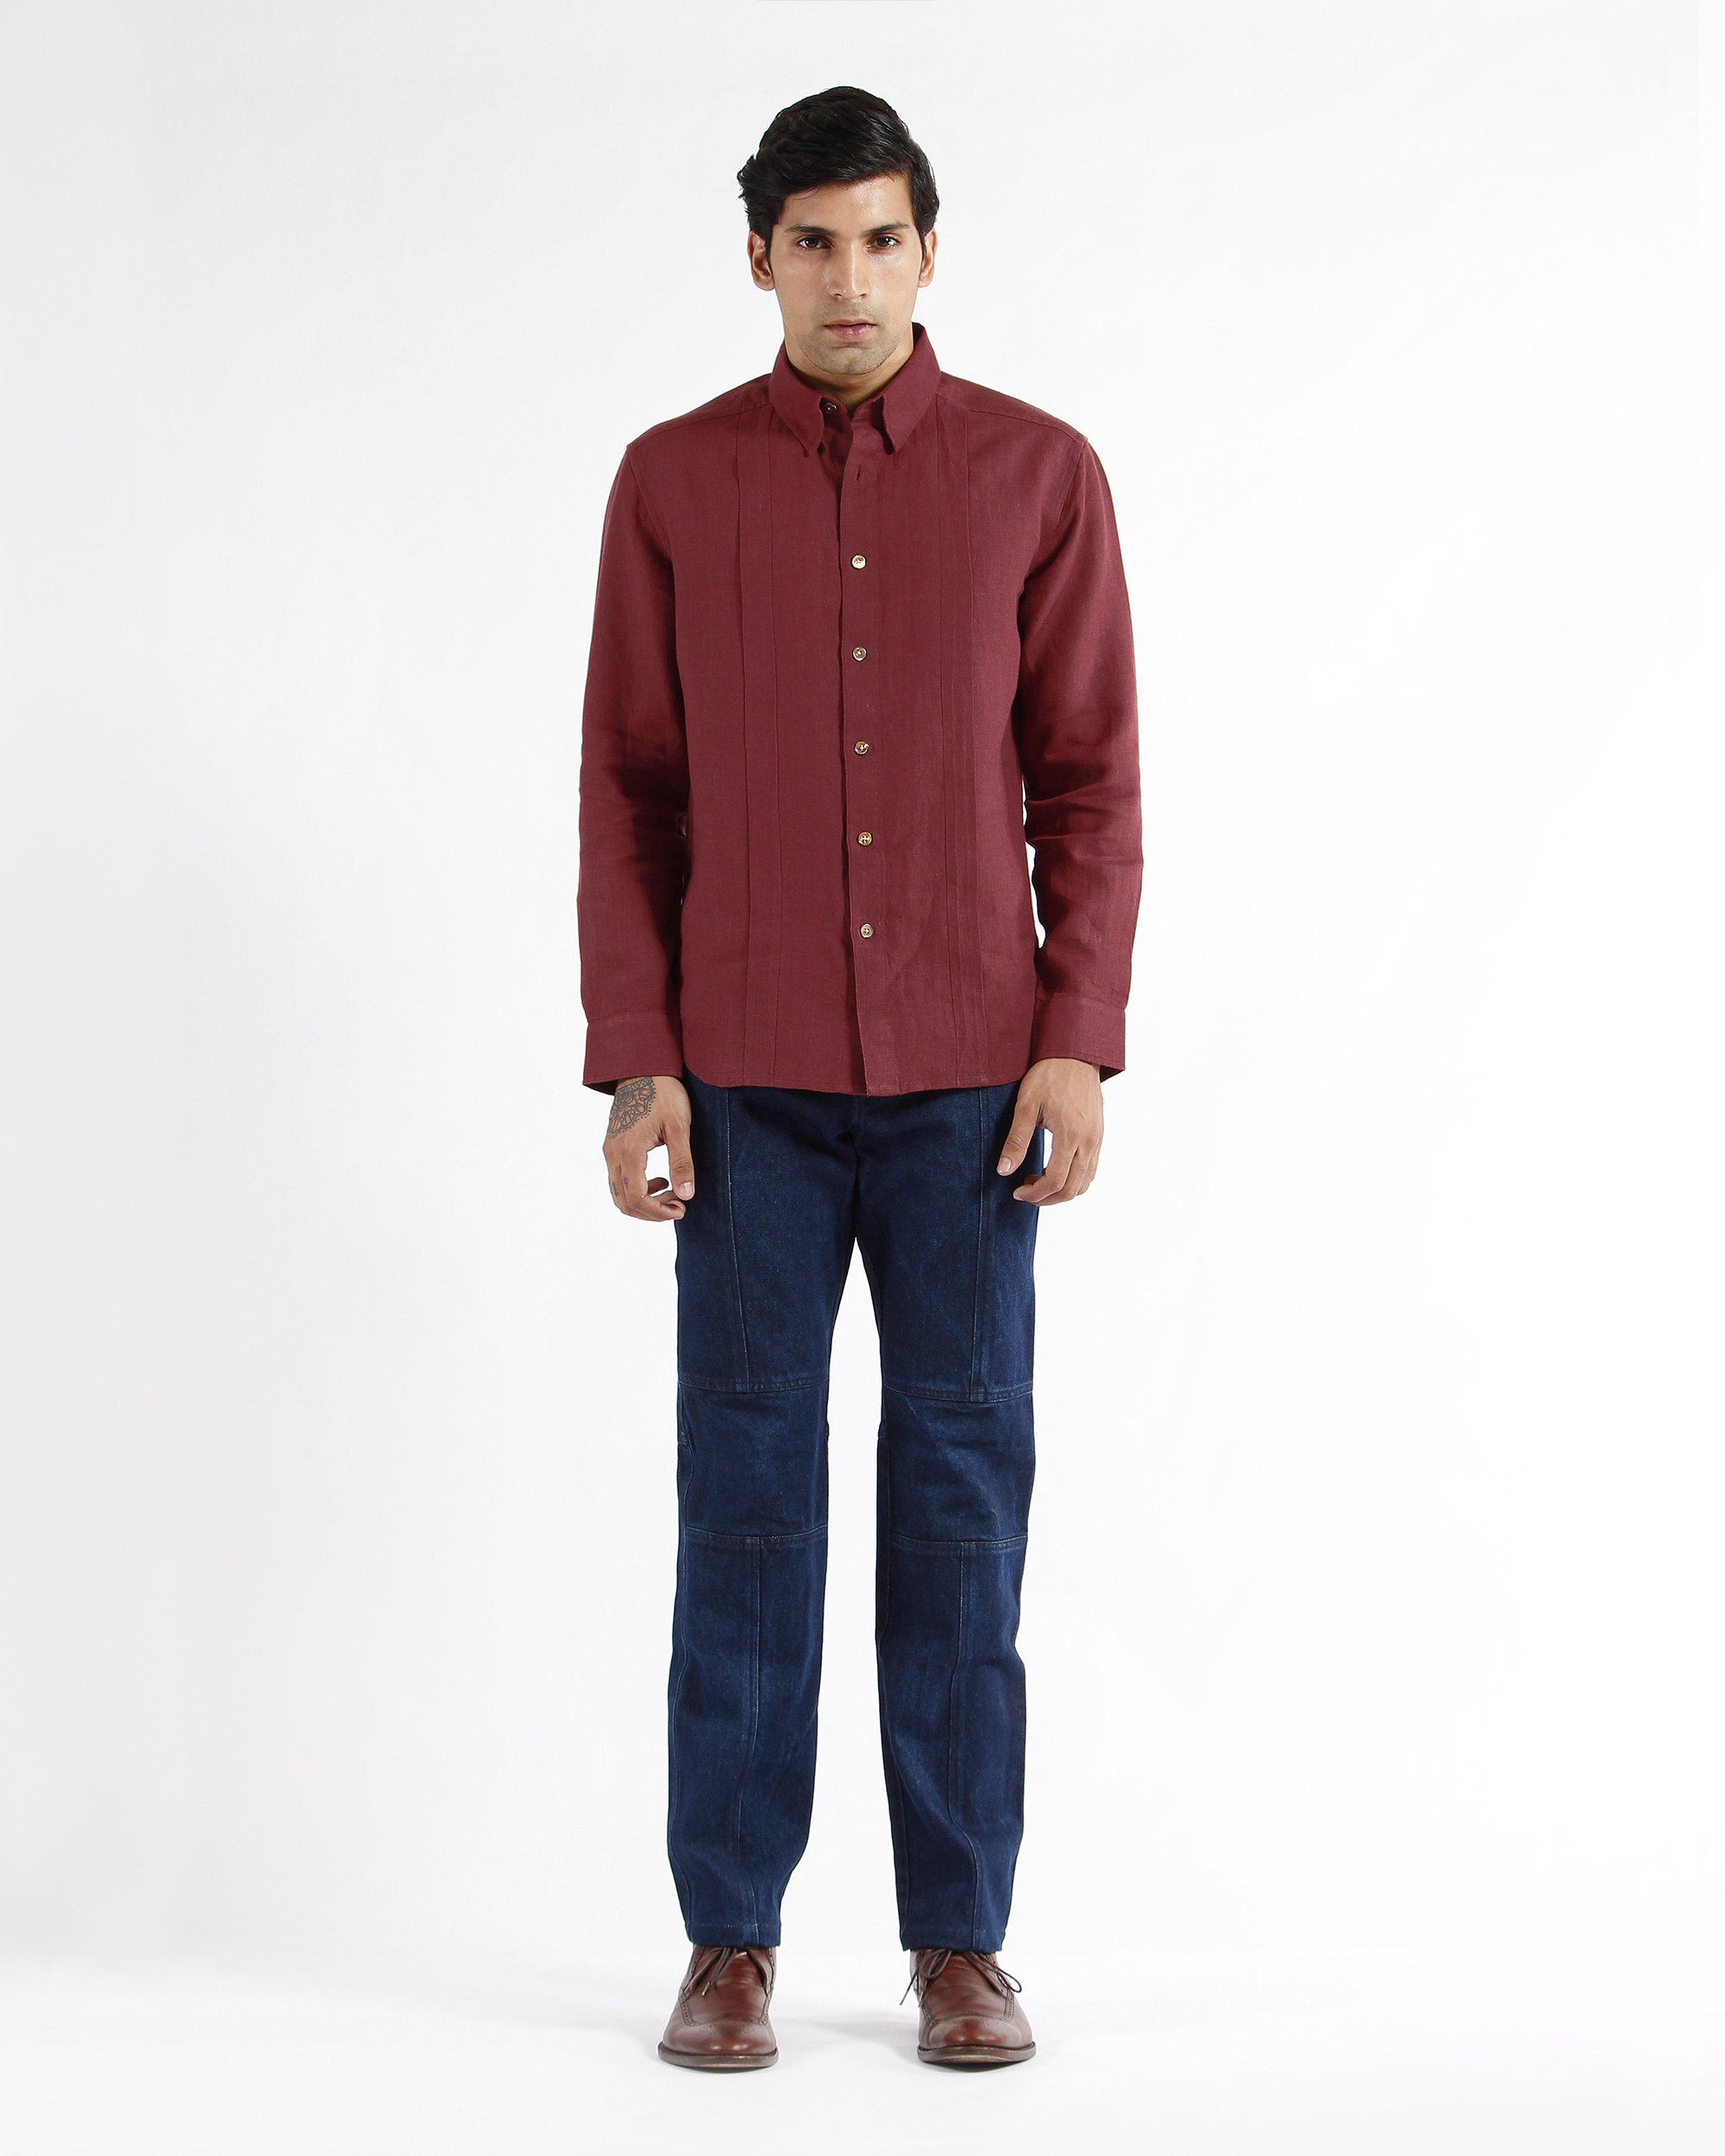 Maroon linen pleated dress shirt by Dhatu Design Studio | The Secret Label